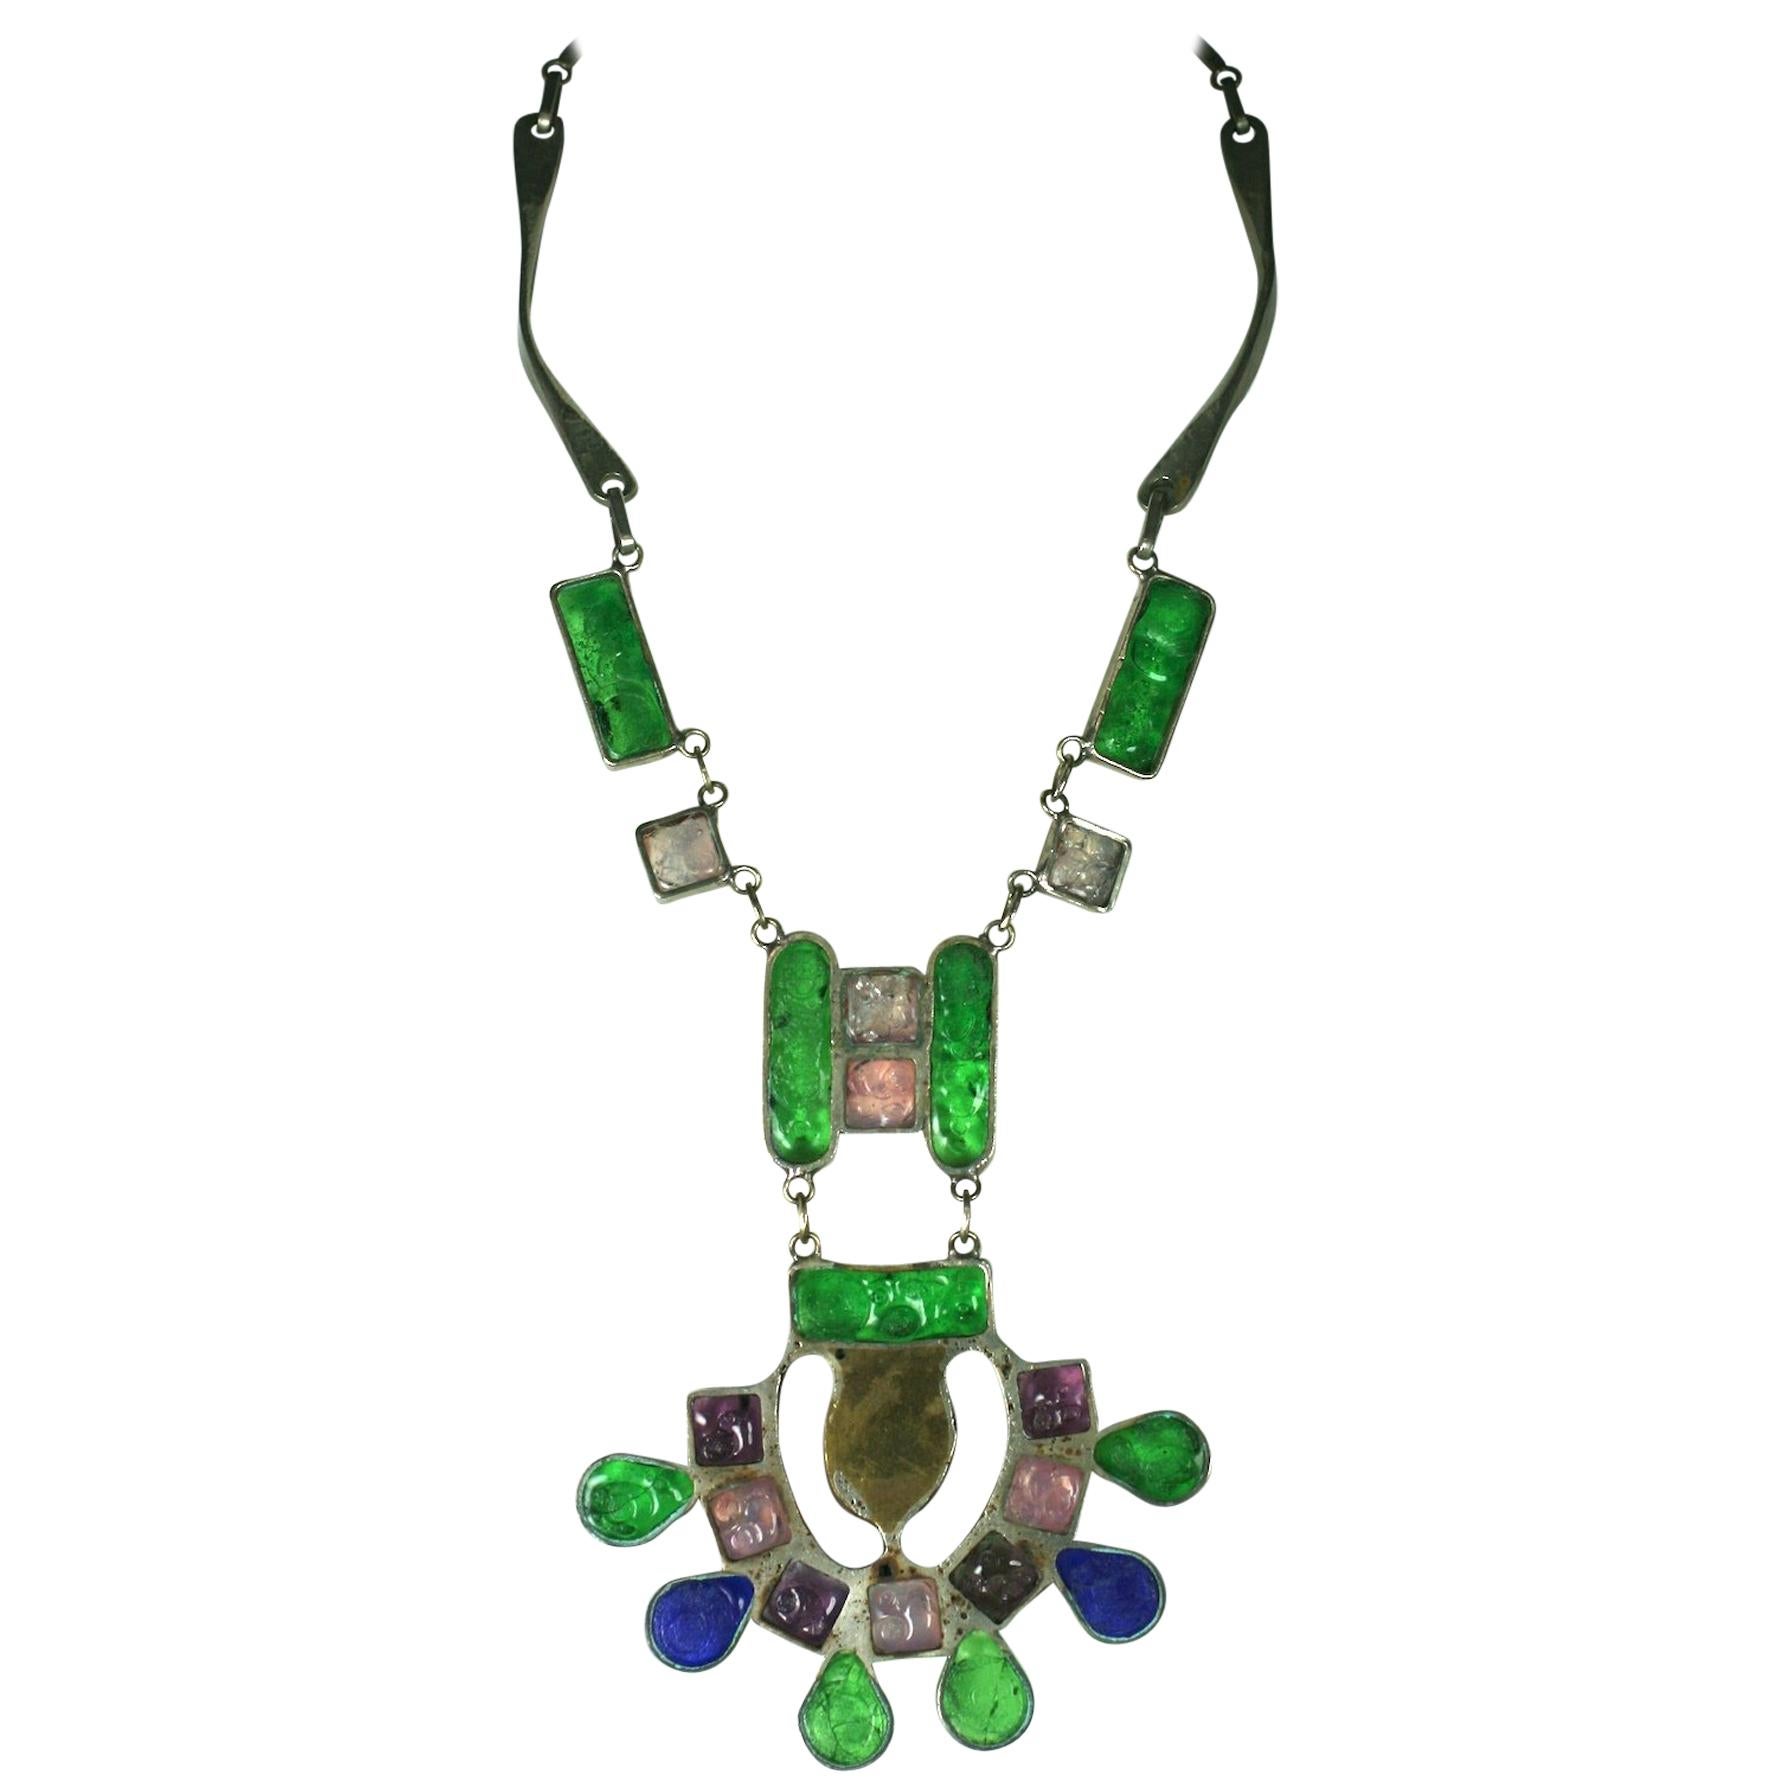 Artisanal Fused Glass Modernist Necklace